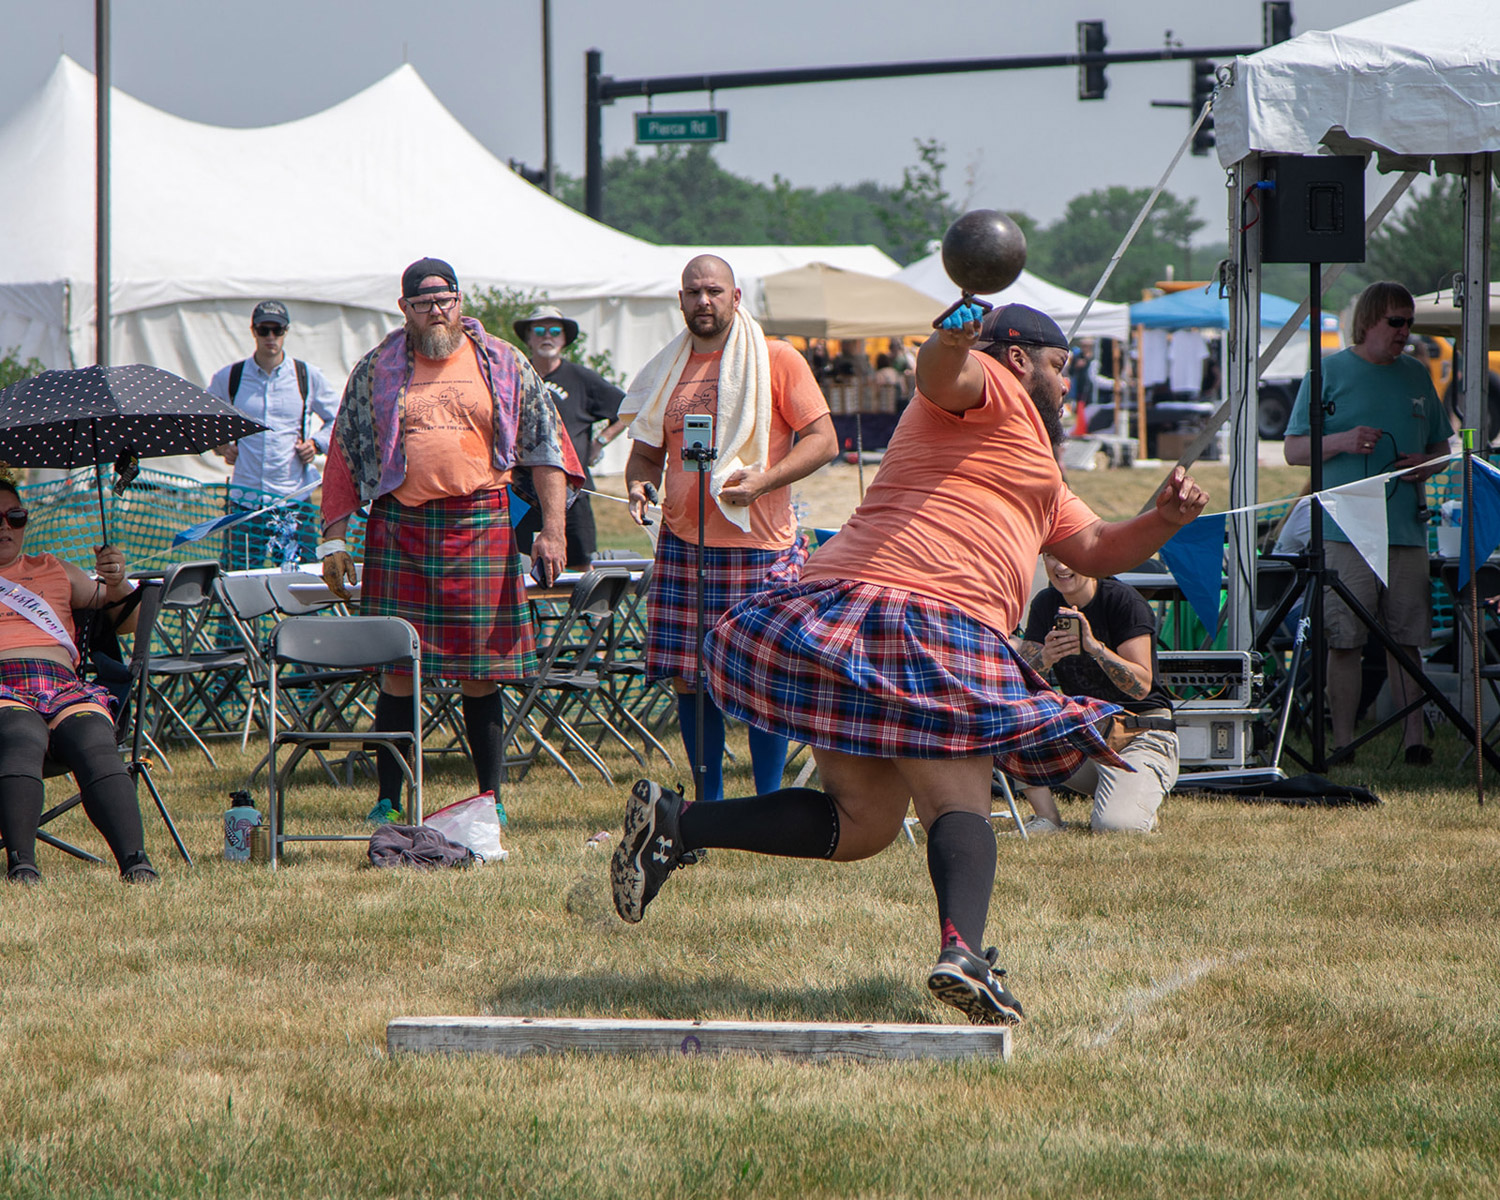 The Scottish Festival & Highland Games - Chicago Scots